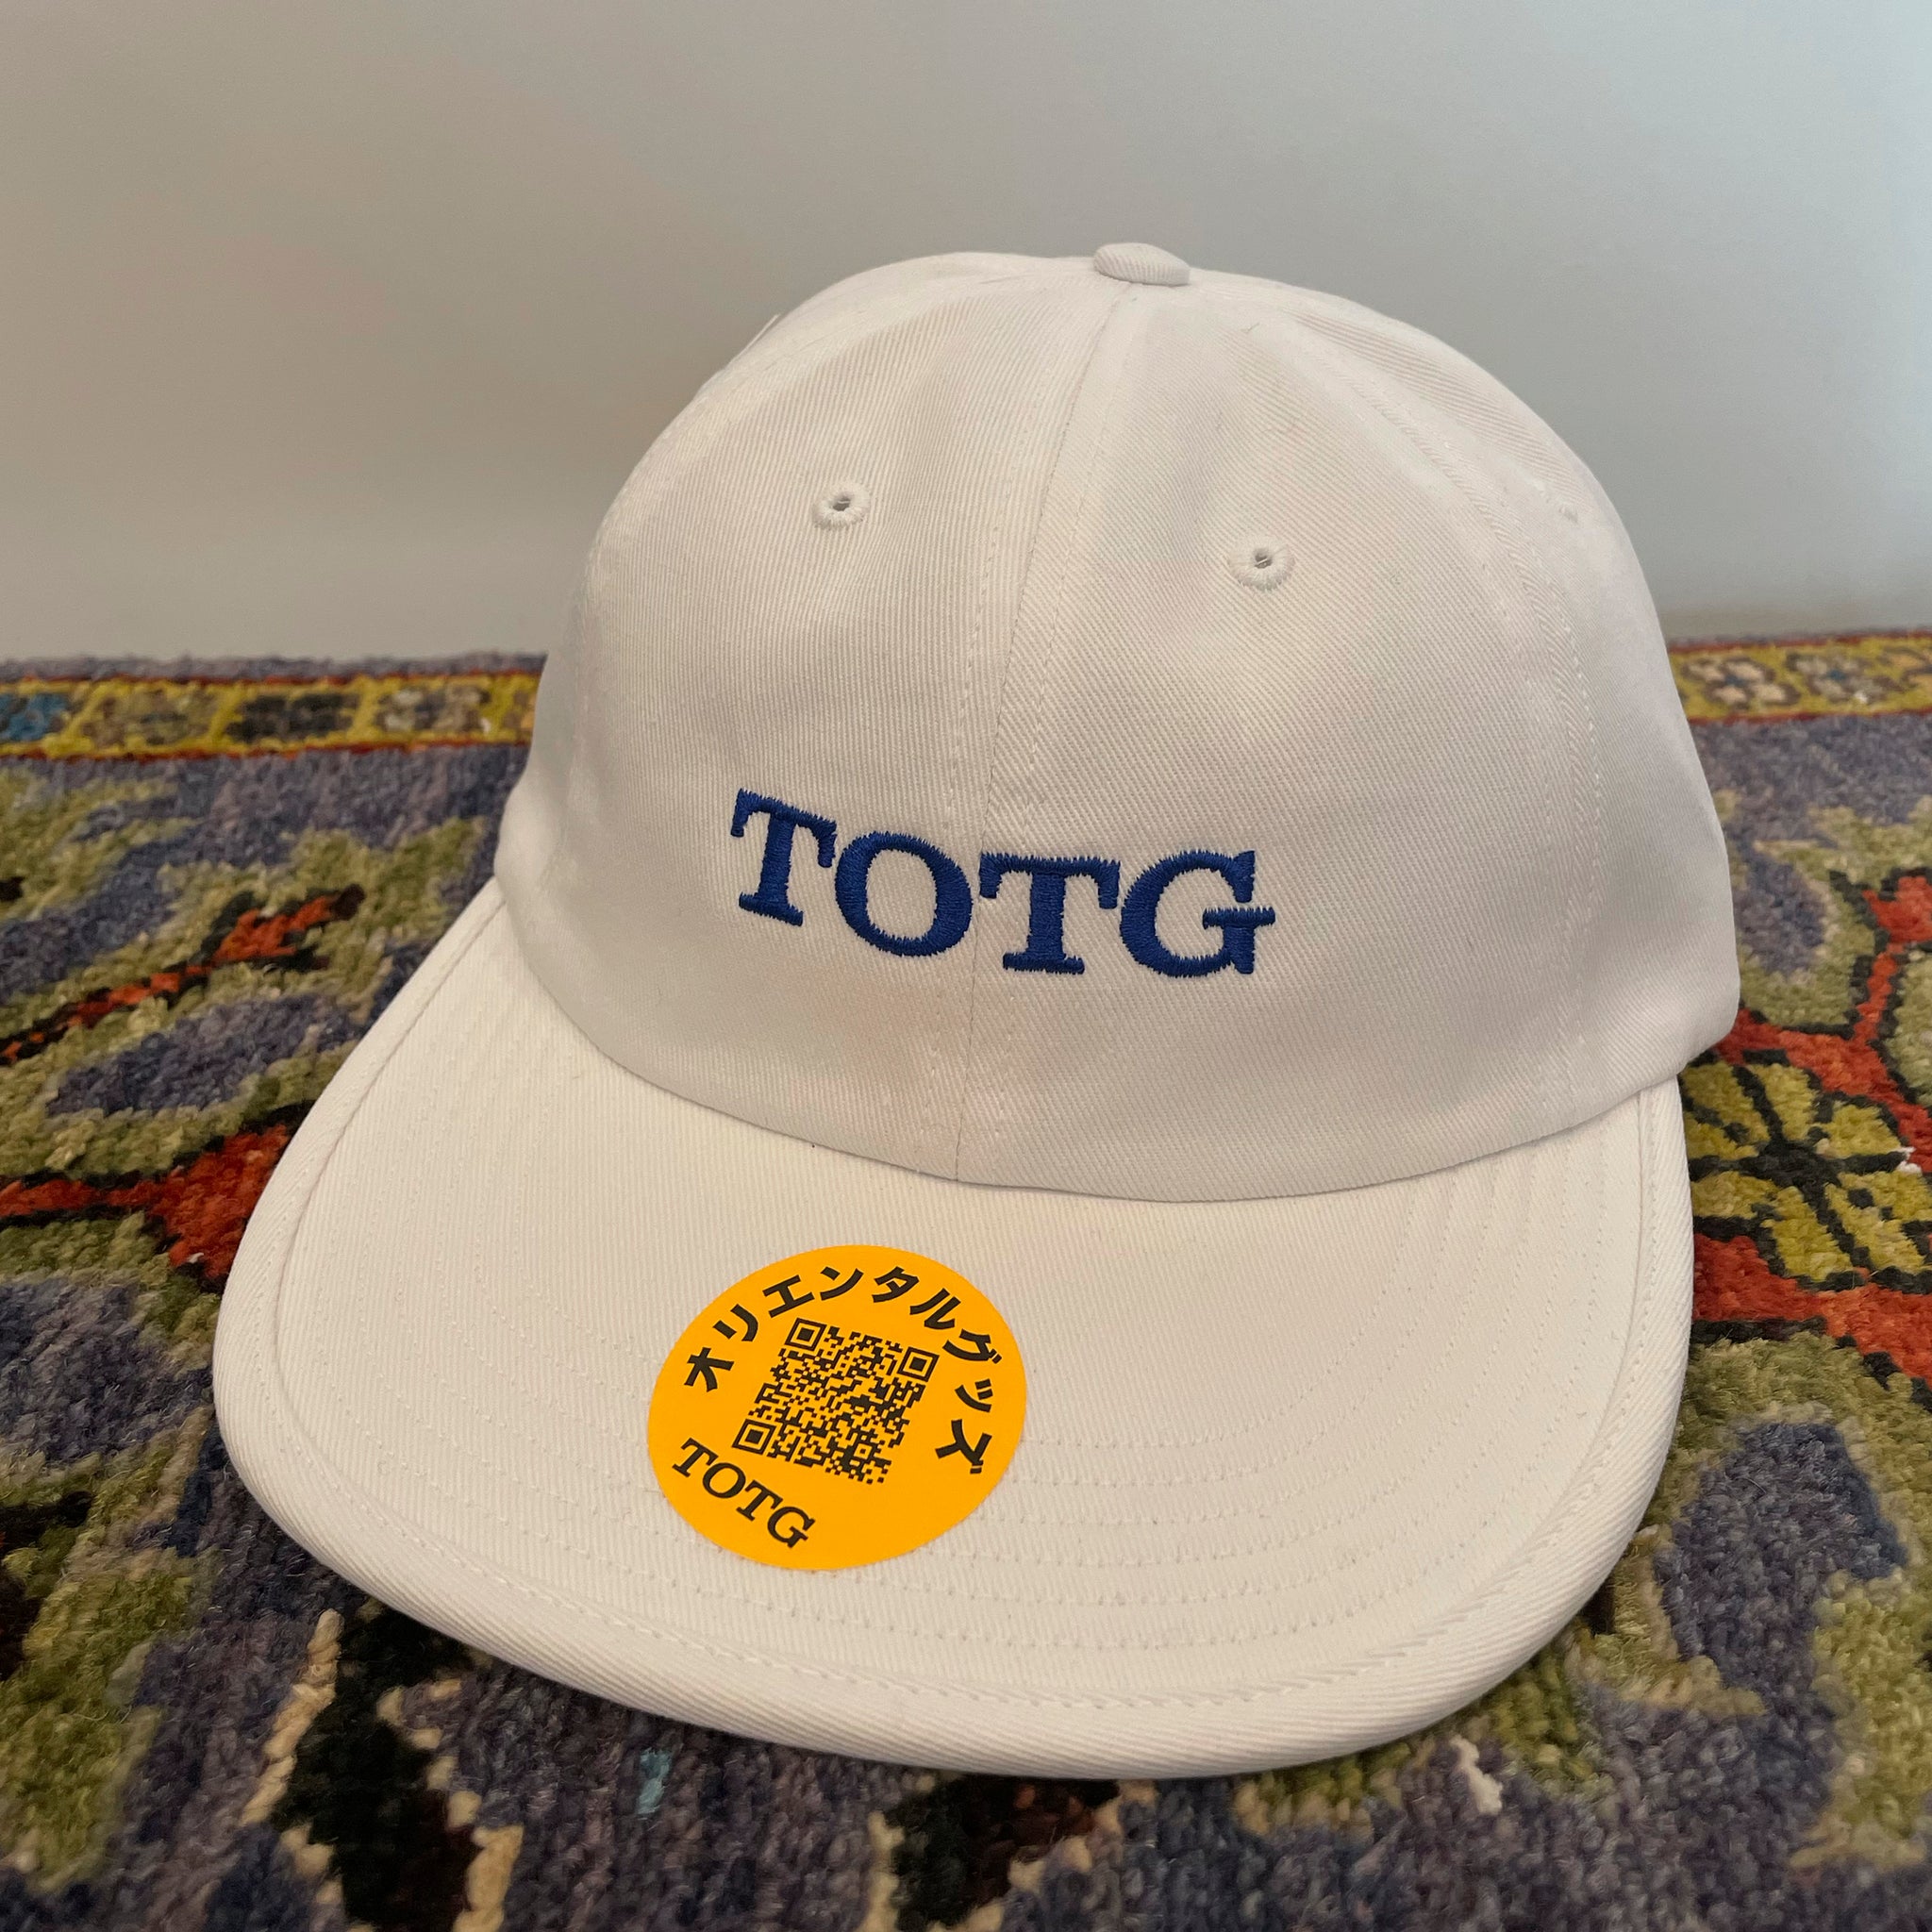 TOTG TOUR NOVELTY CAP-